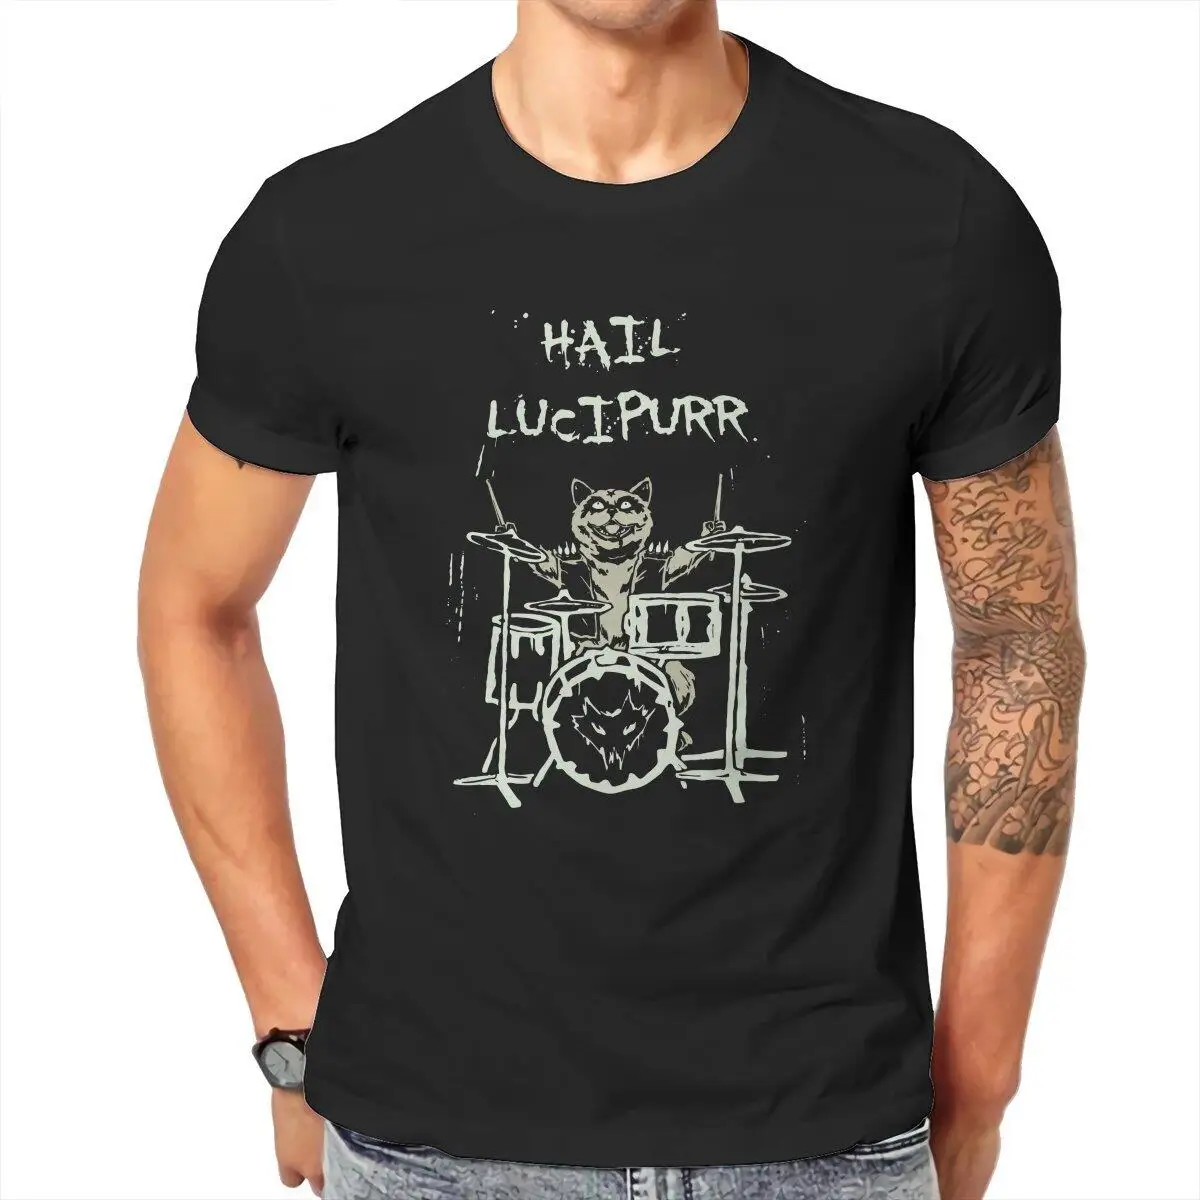 Hail Lucipurr Heavy Metal Satan Cat Drummer  T-Shirts Men Round Collar Cotton T Shirts  Short Sleeve Tees Plus Size Clothing